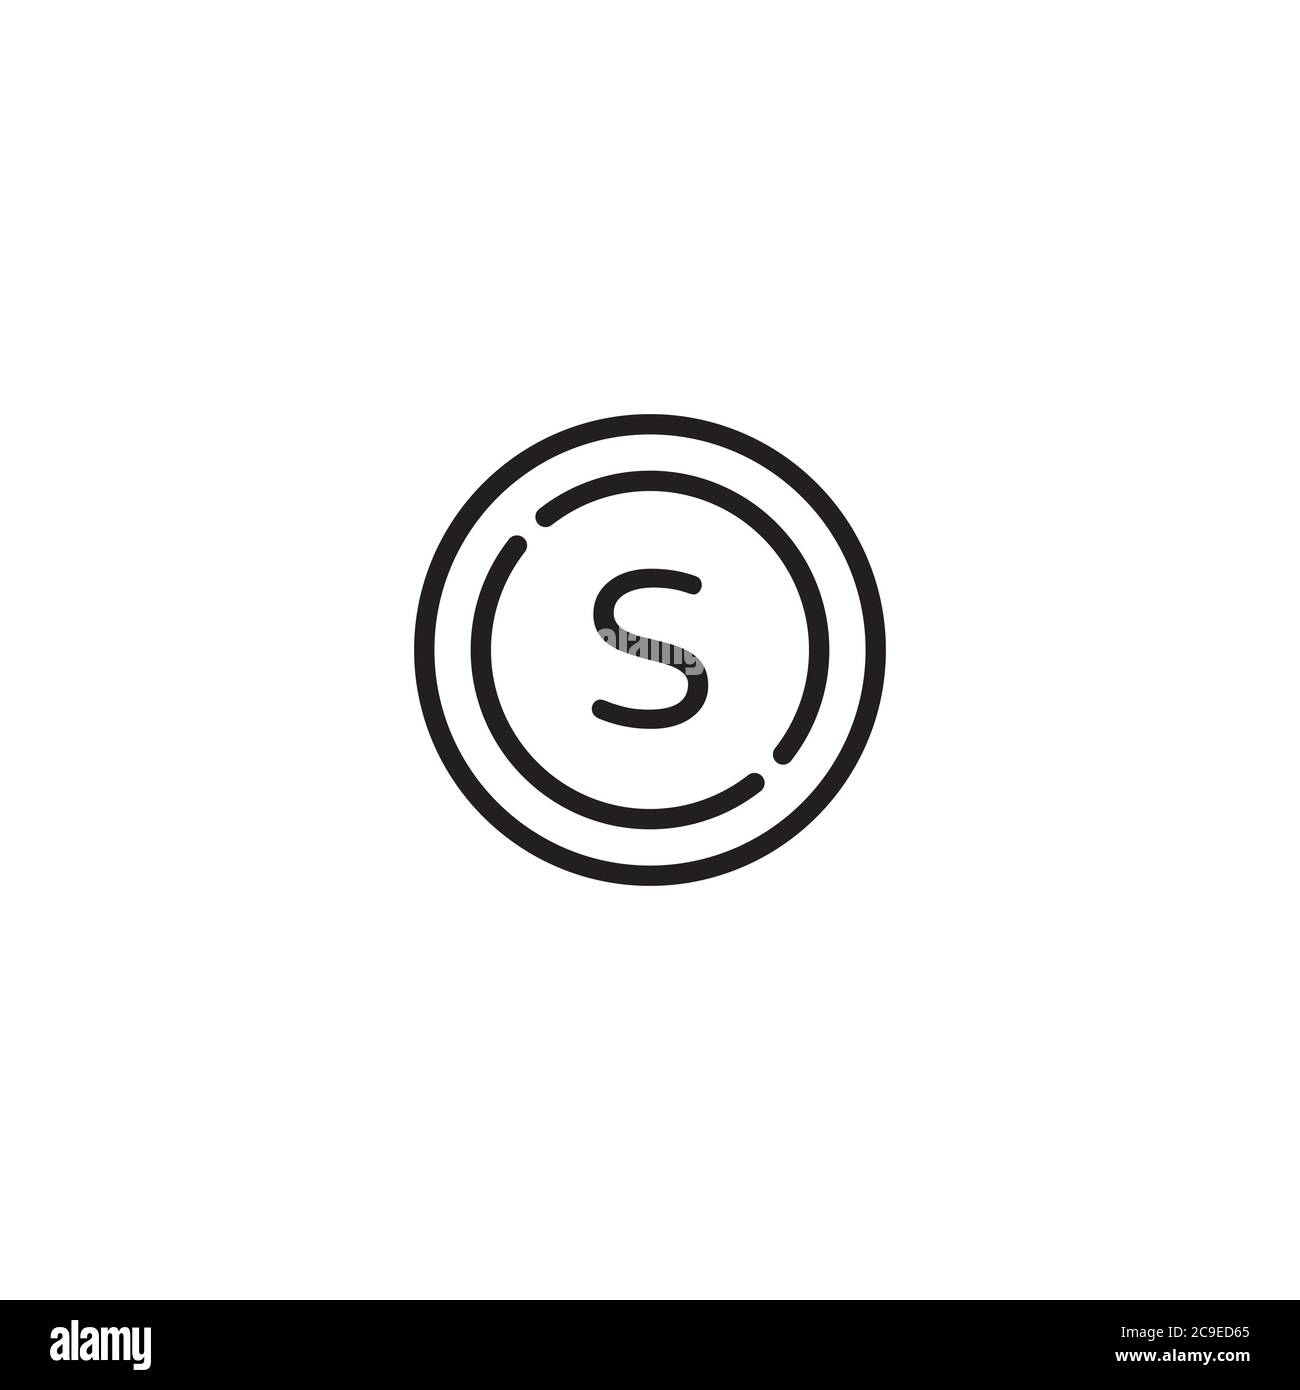 Letter S logo / icon design Stock Vector